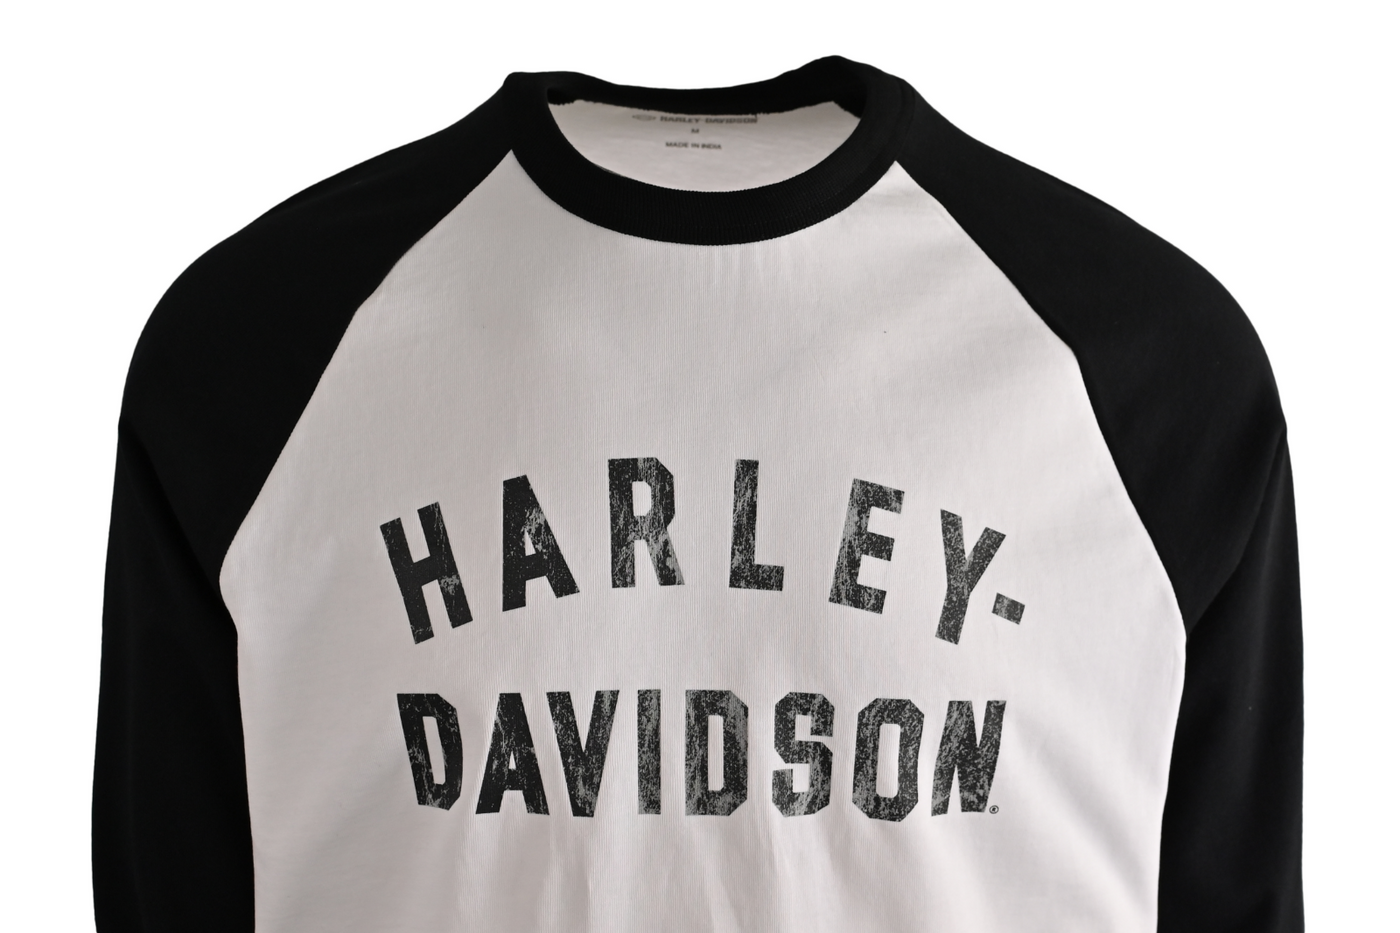 Harley-Davidson Men's T-Shirt Bright White Colorblocked Staple 3/4 Raglan (S29)